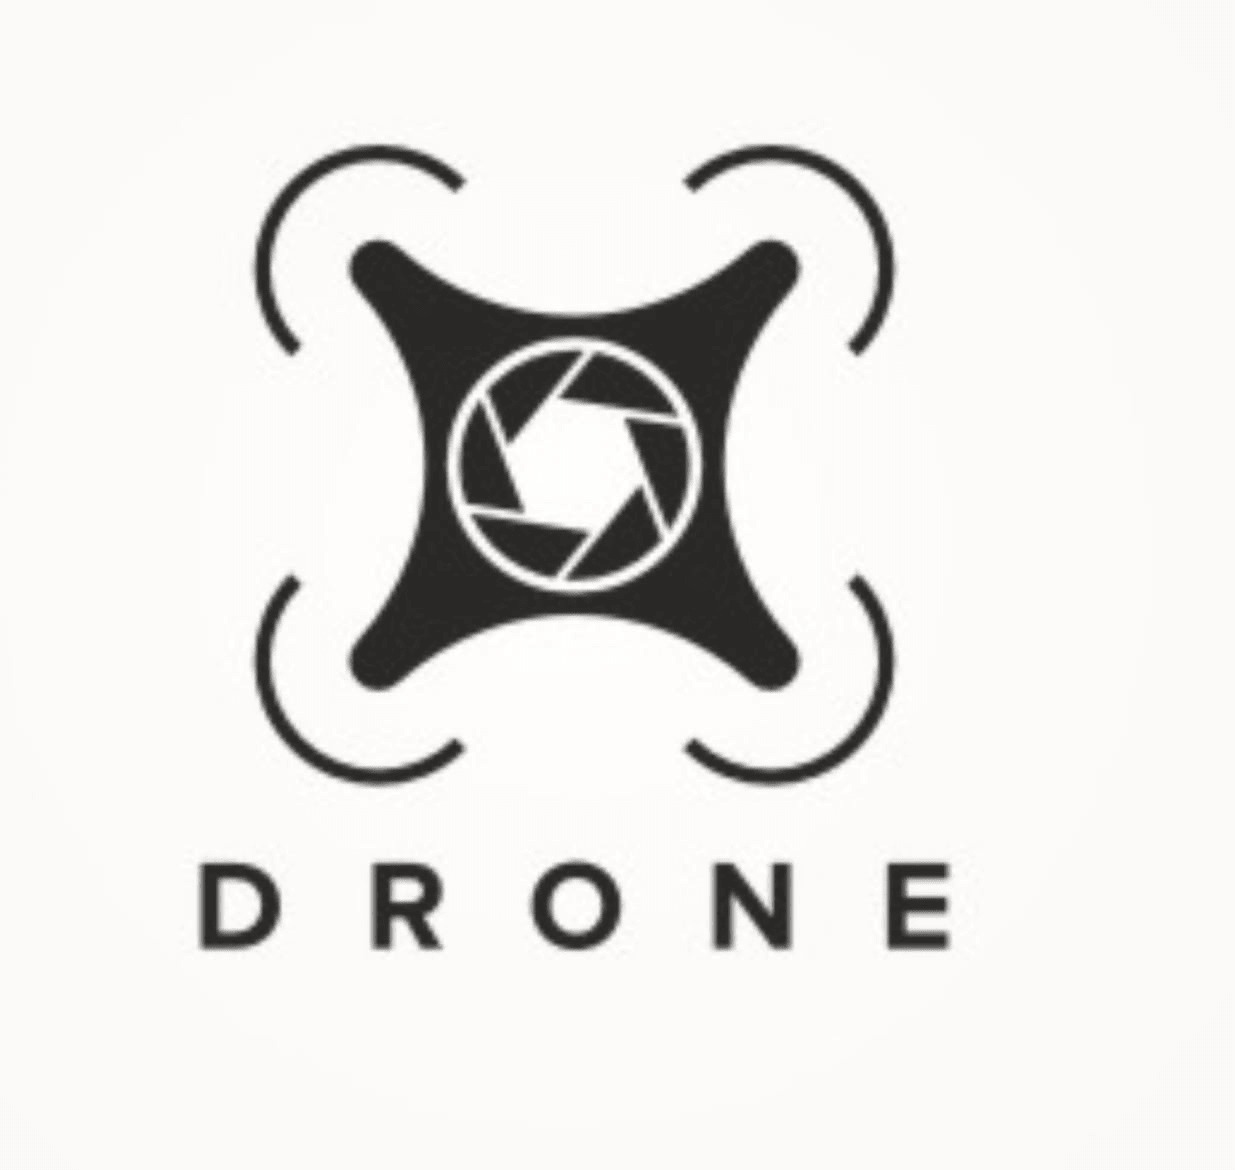 A Vista de Drone